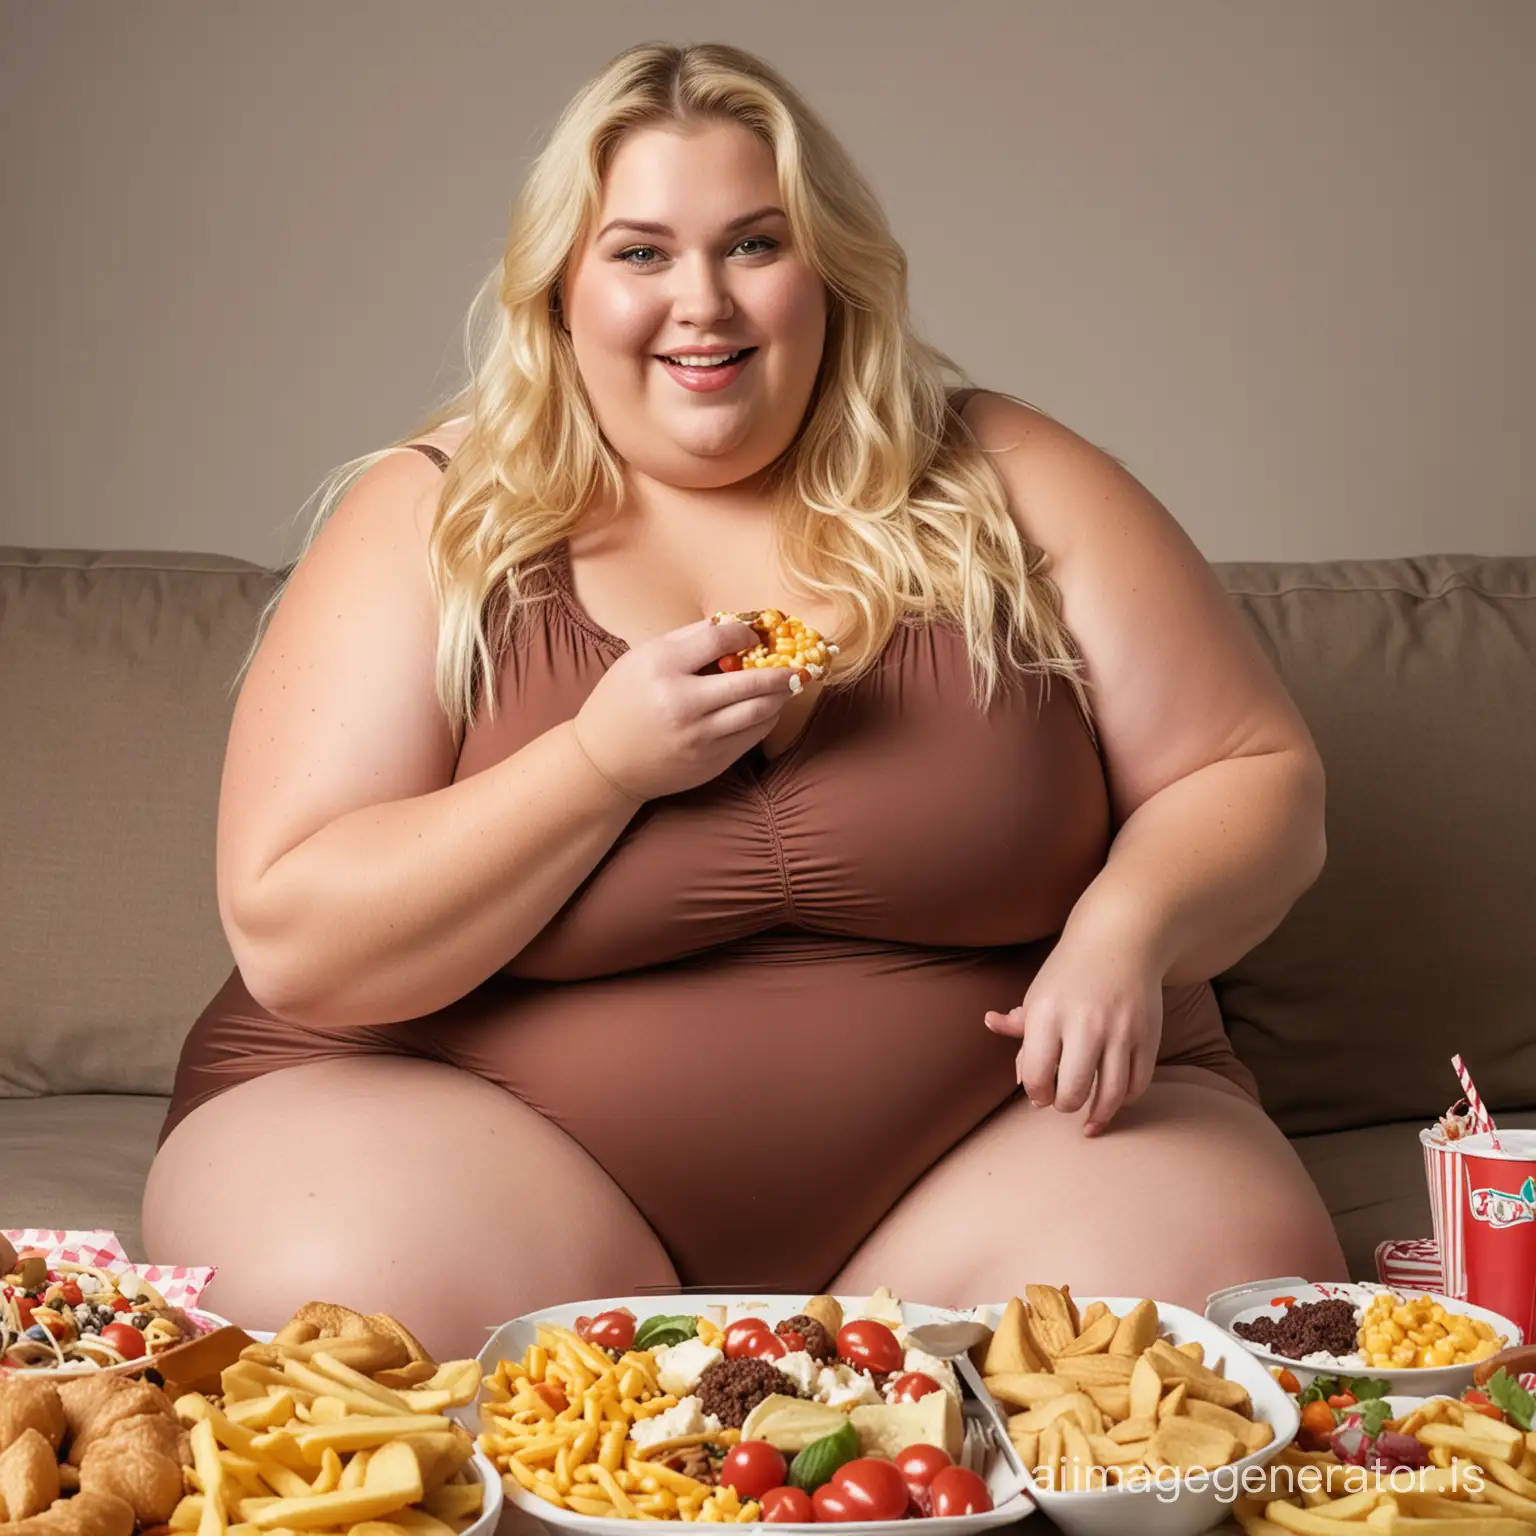 Joyful-Obese-Woman-Enjoying-Unhealthy-Food-Feast